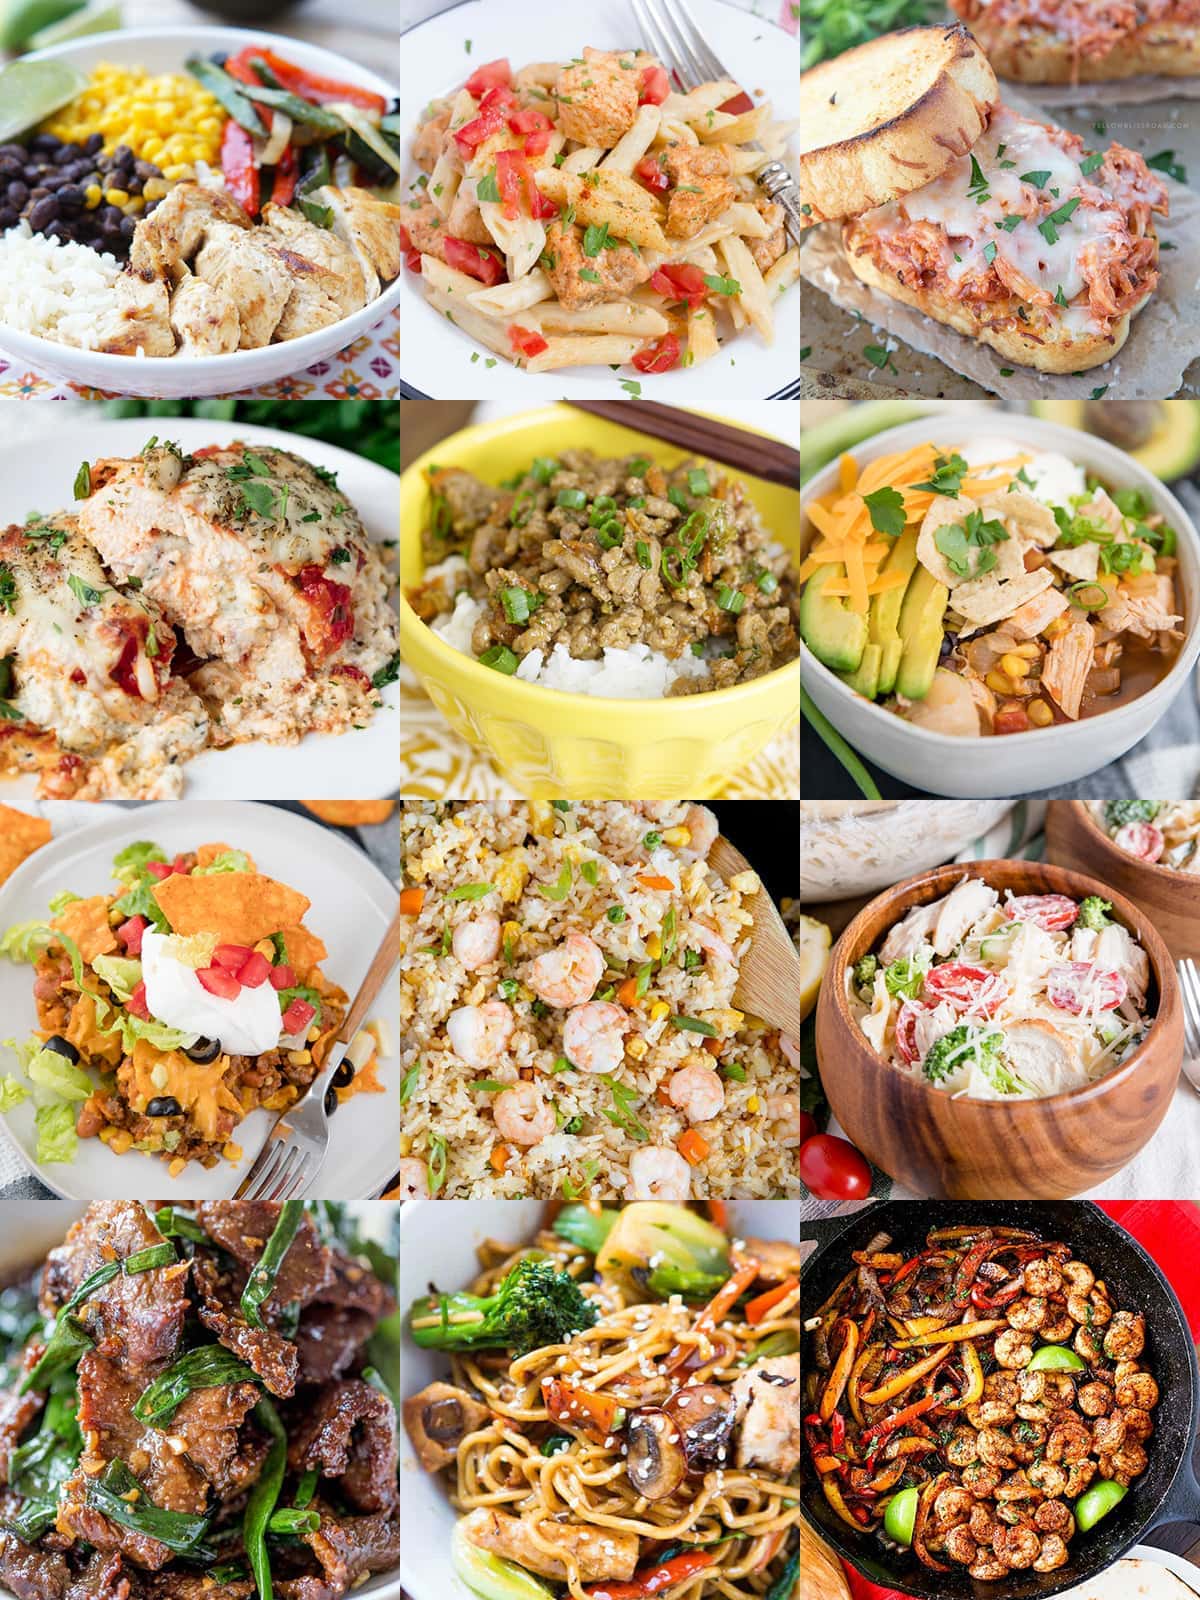 Easy Dinner Ideas Your Family Will Love | YellowBlissRoad.com